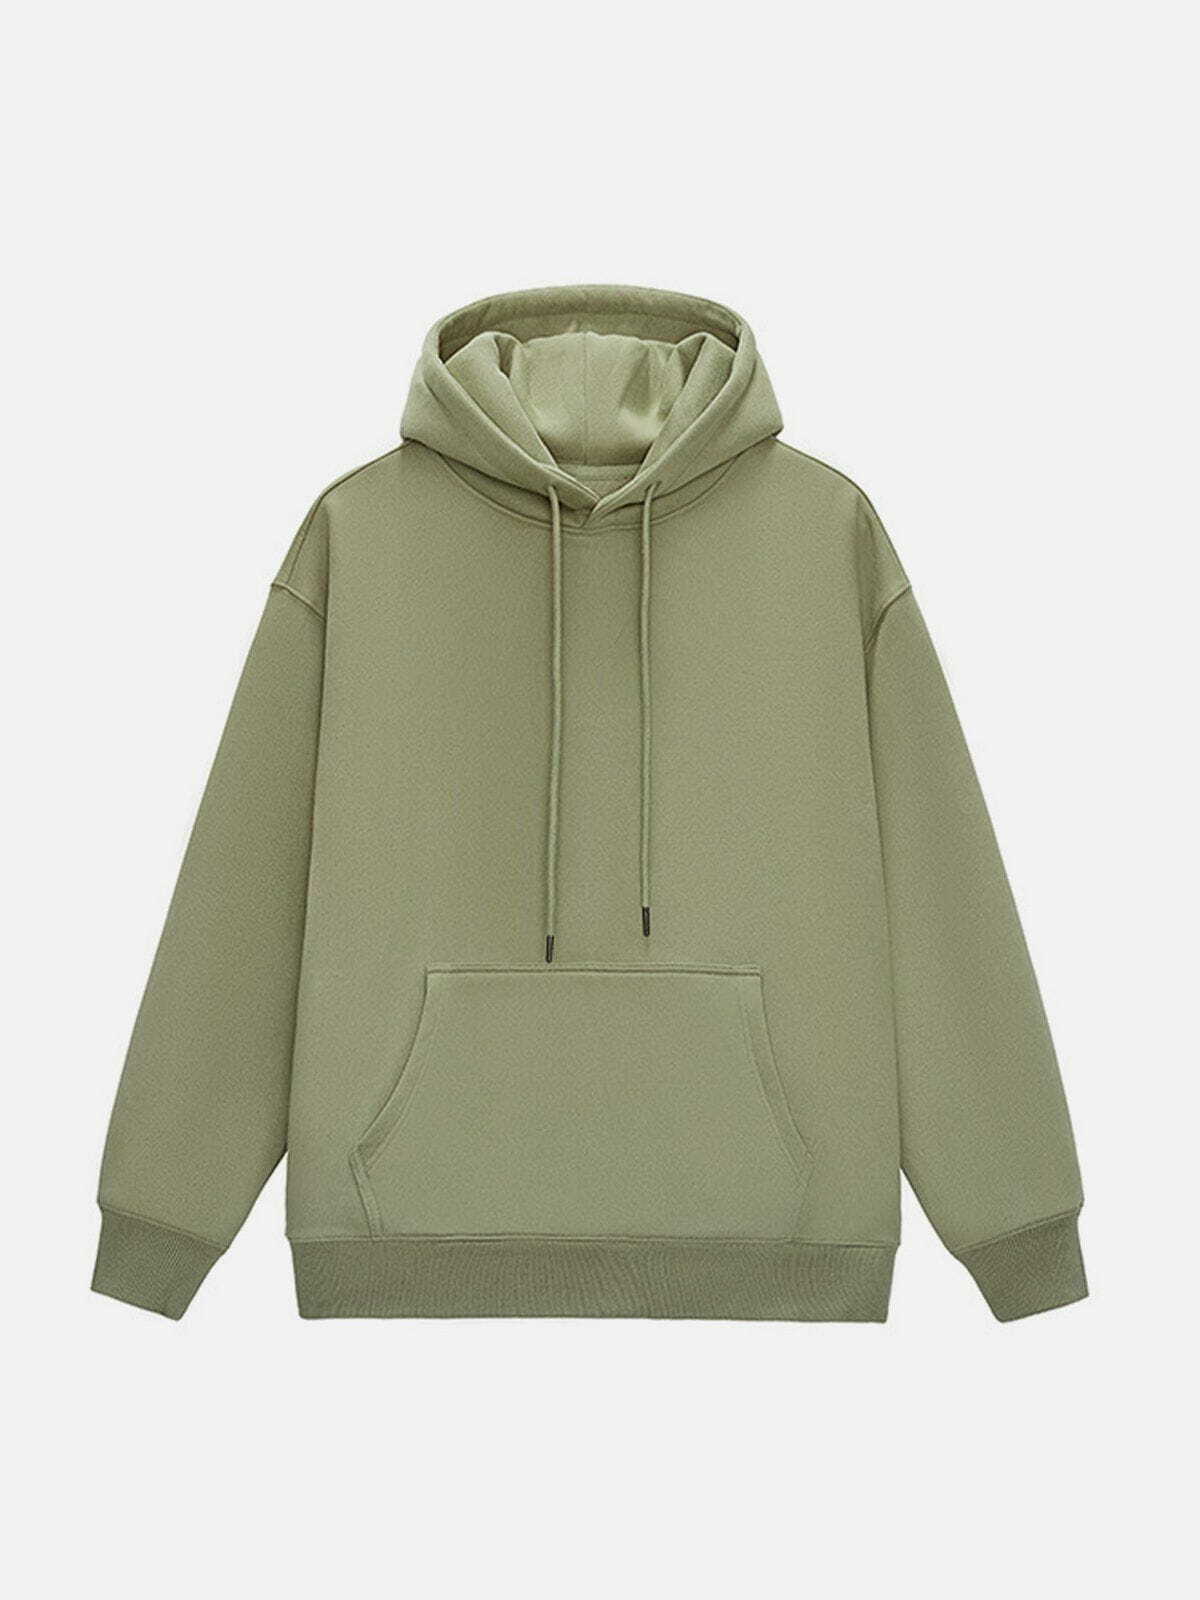 dynamic drawstring hoodie versatile & vibrant streetwear 8814